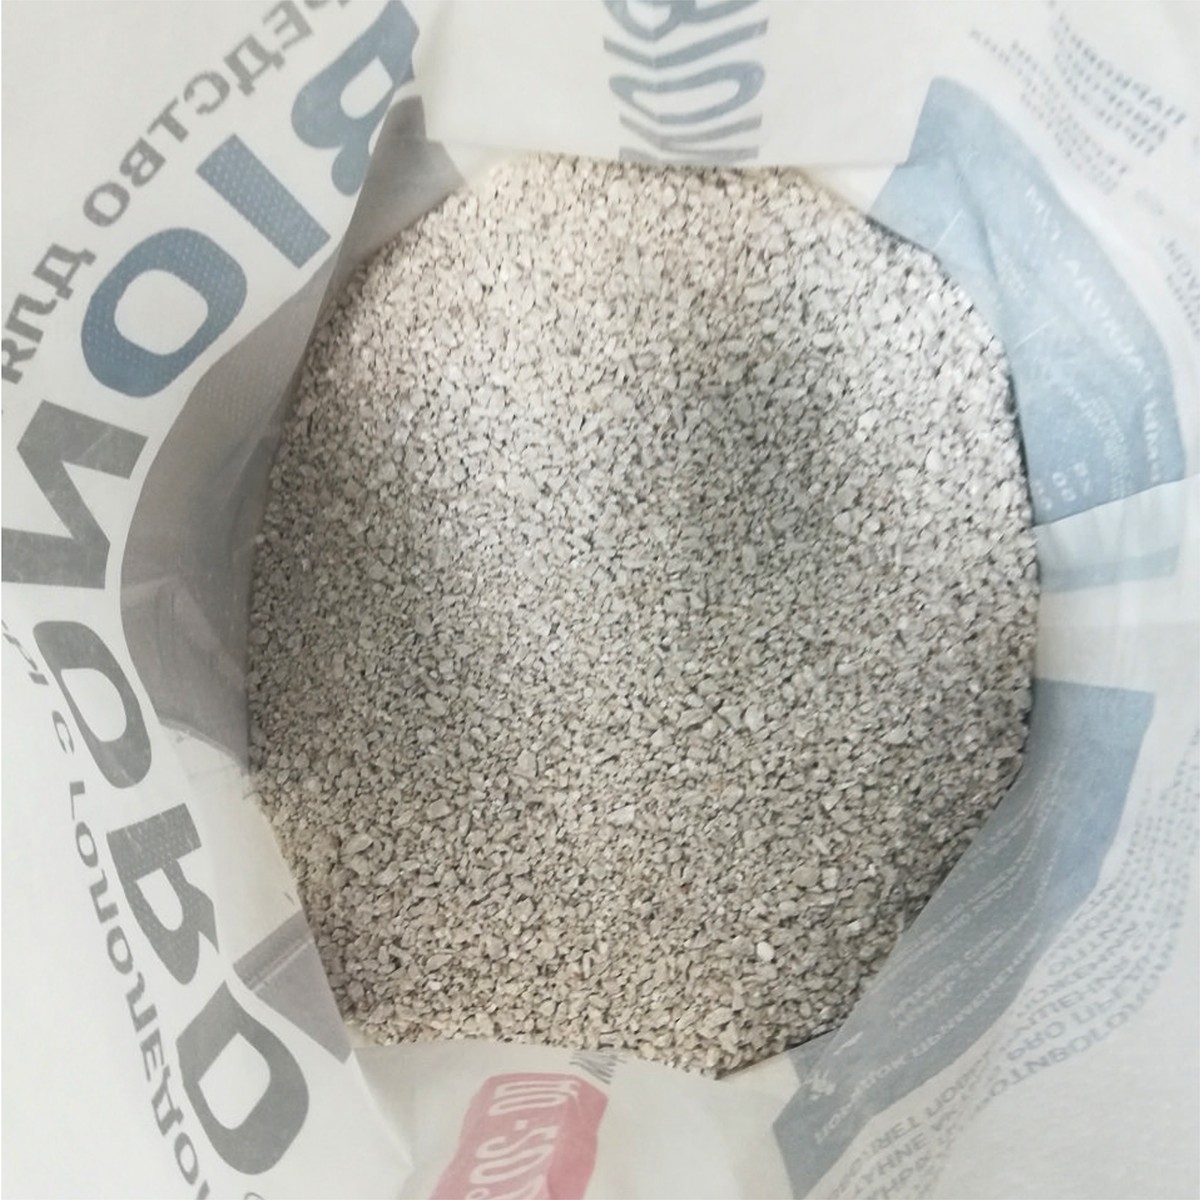 Антигололед "bionord pro" 23 кг (1/40)